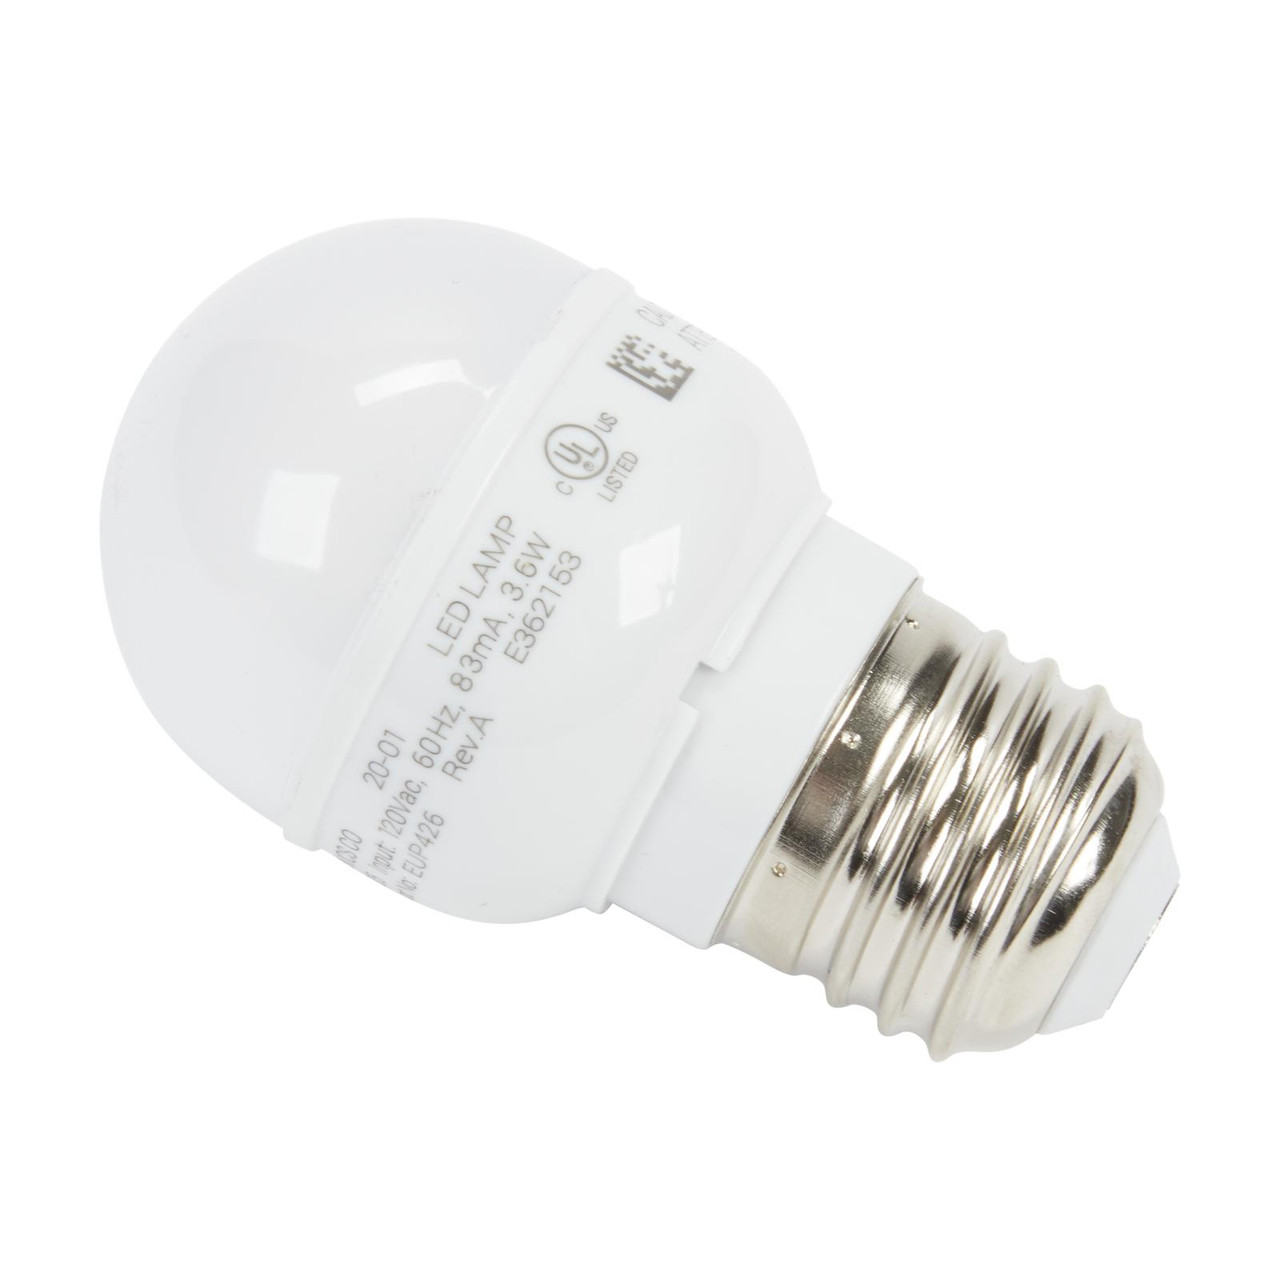 Whirlpool 4396822 - Appliance LED Light Bulb